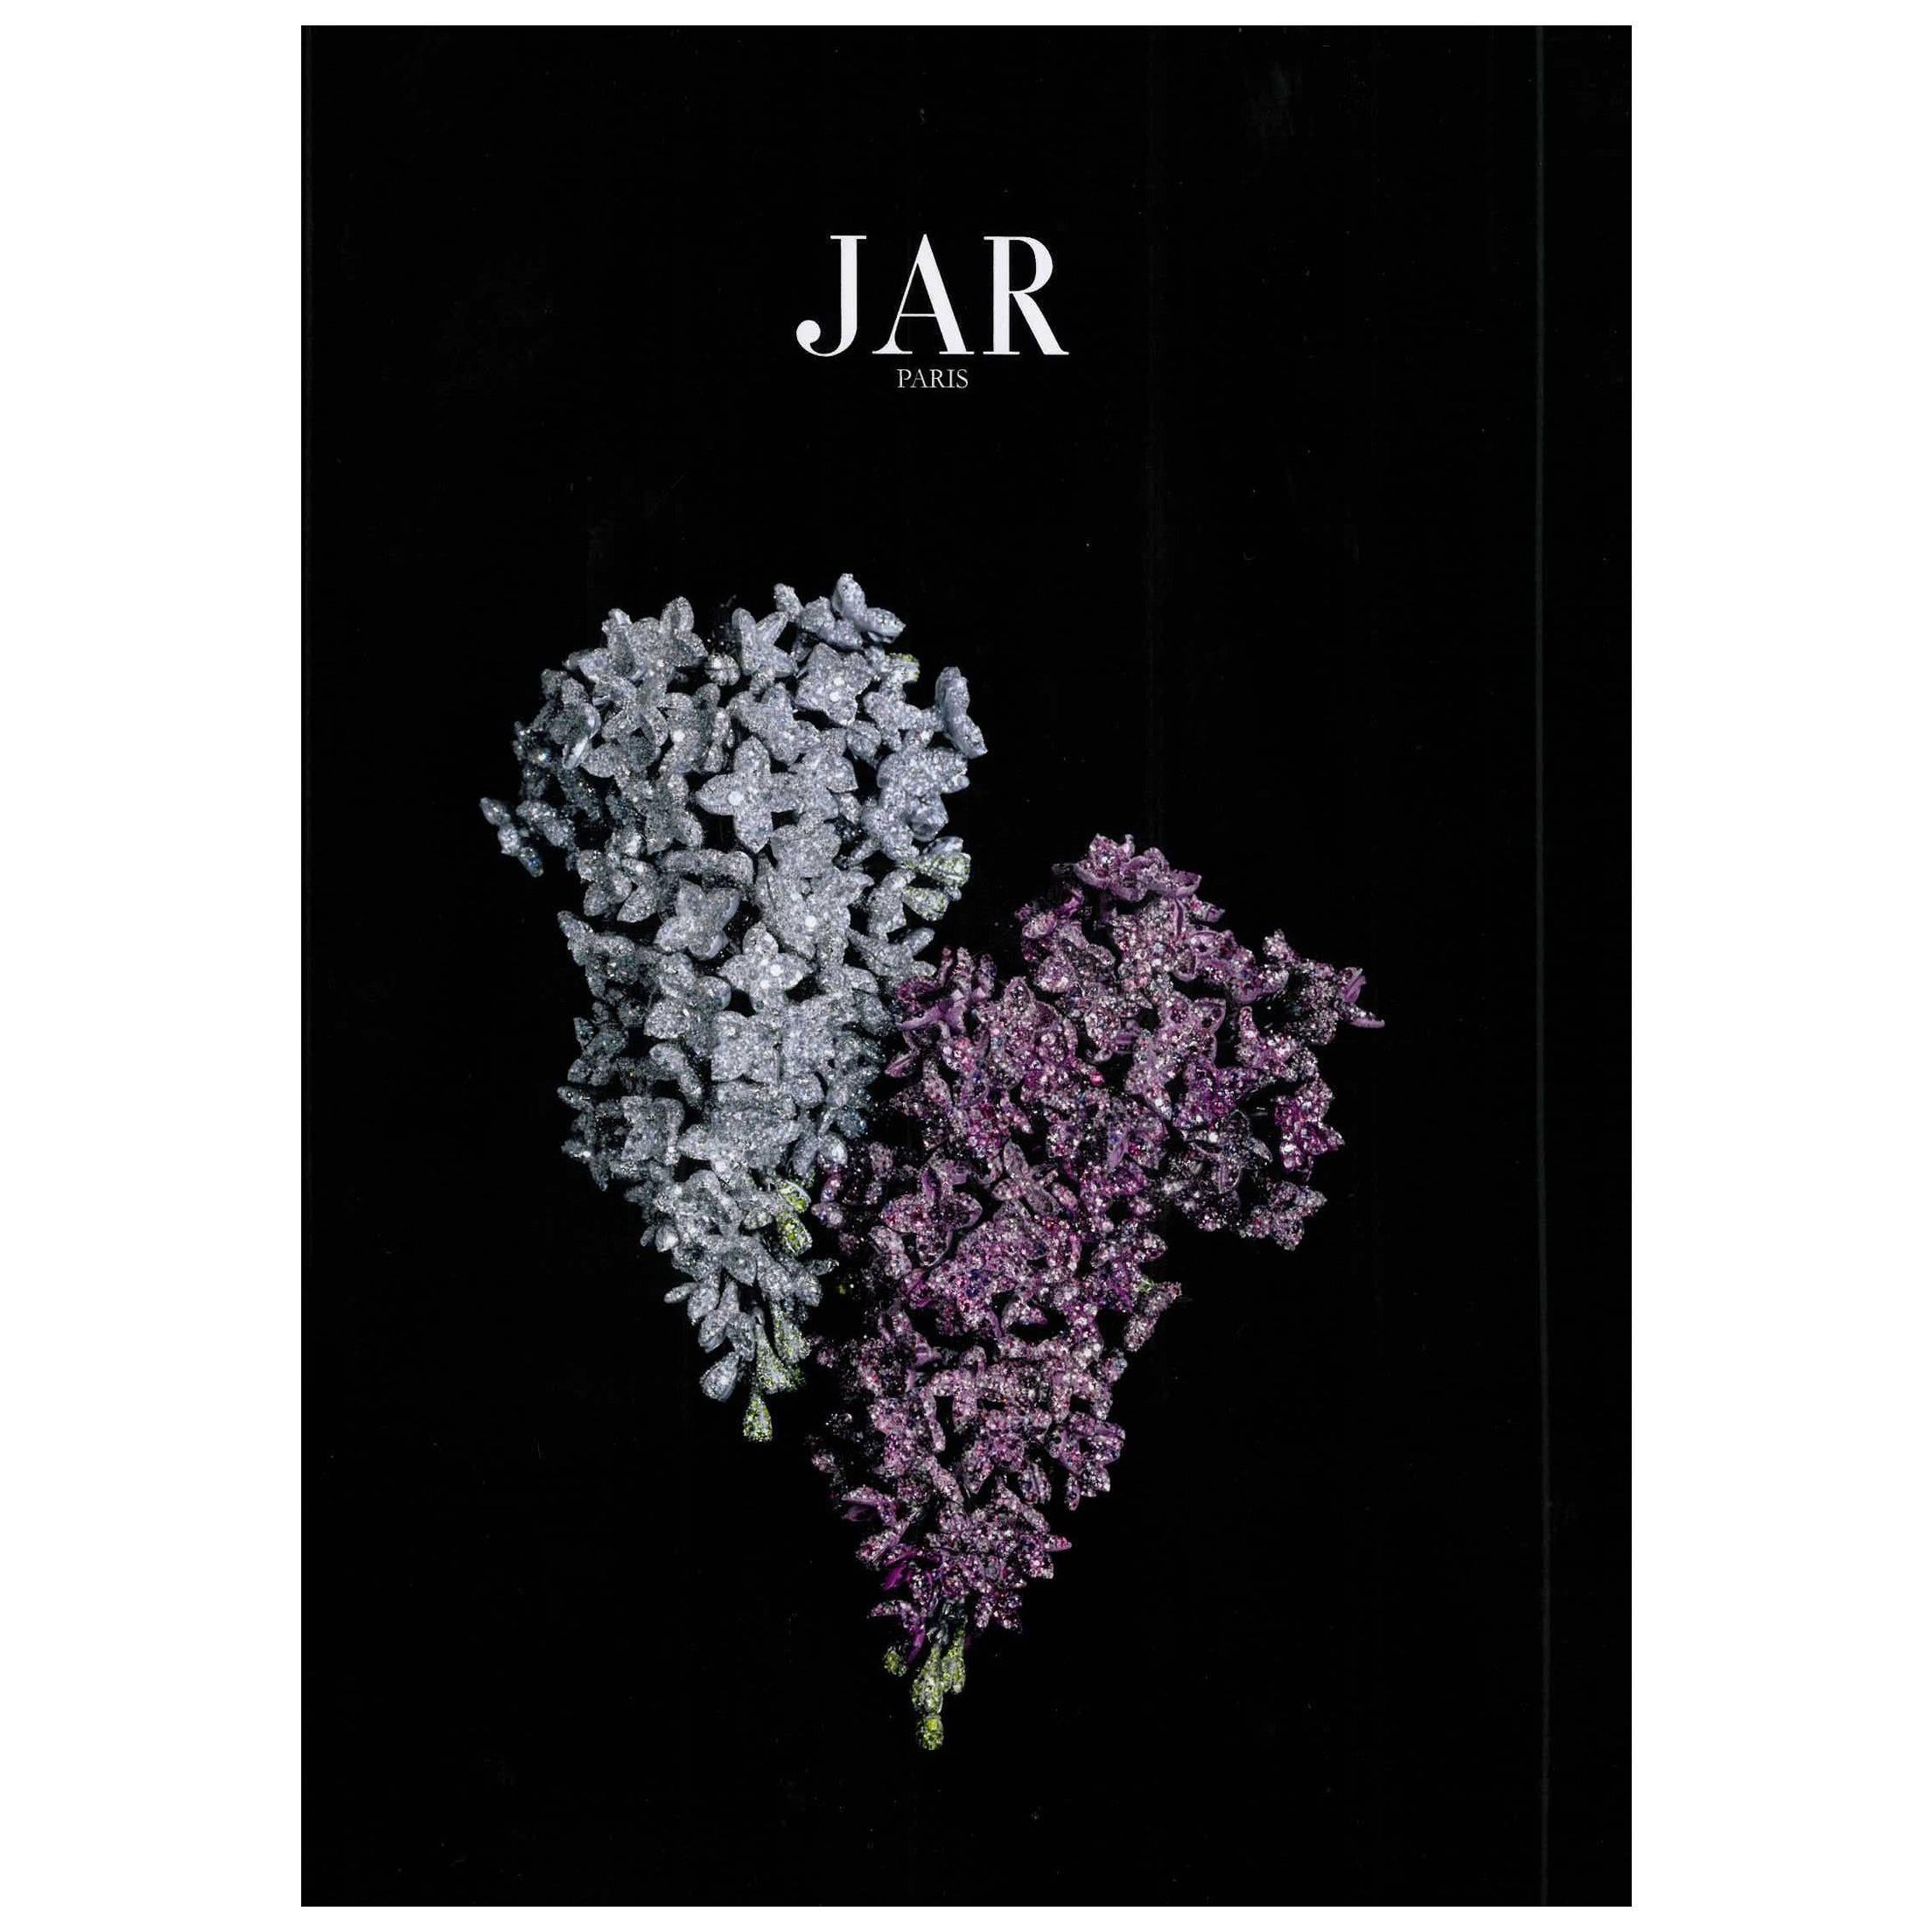 JAR Volume 1 Book